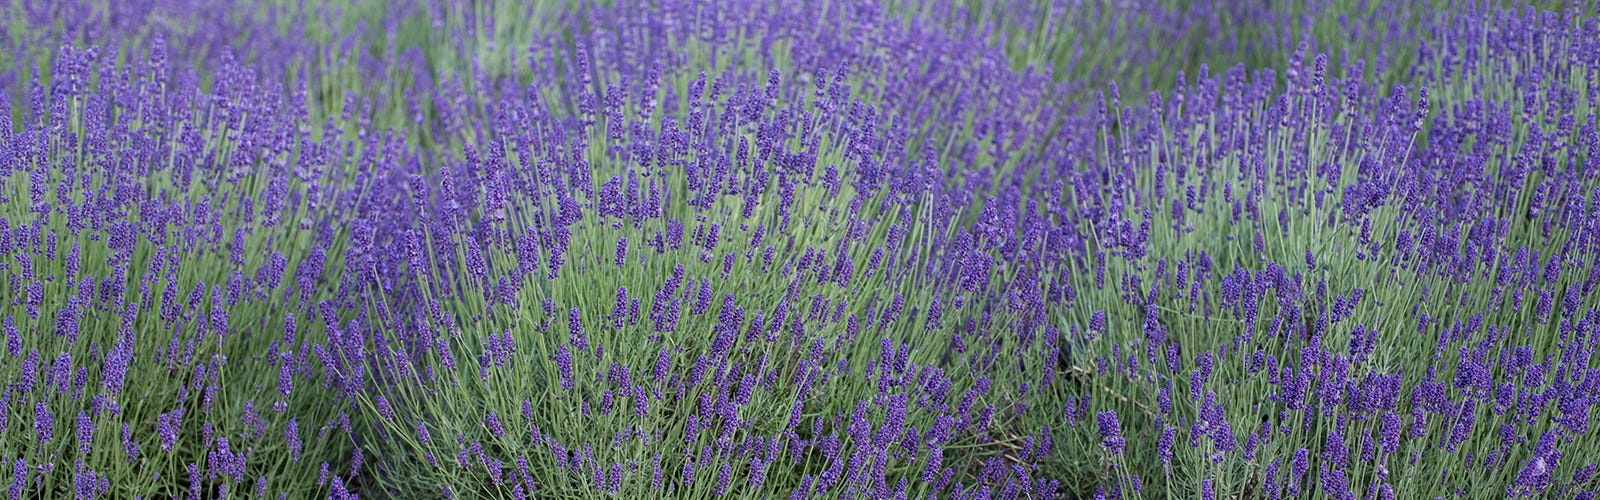 Growing Fragrant Lavender